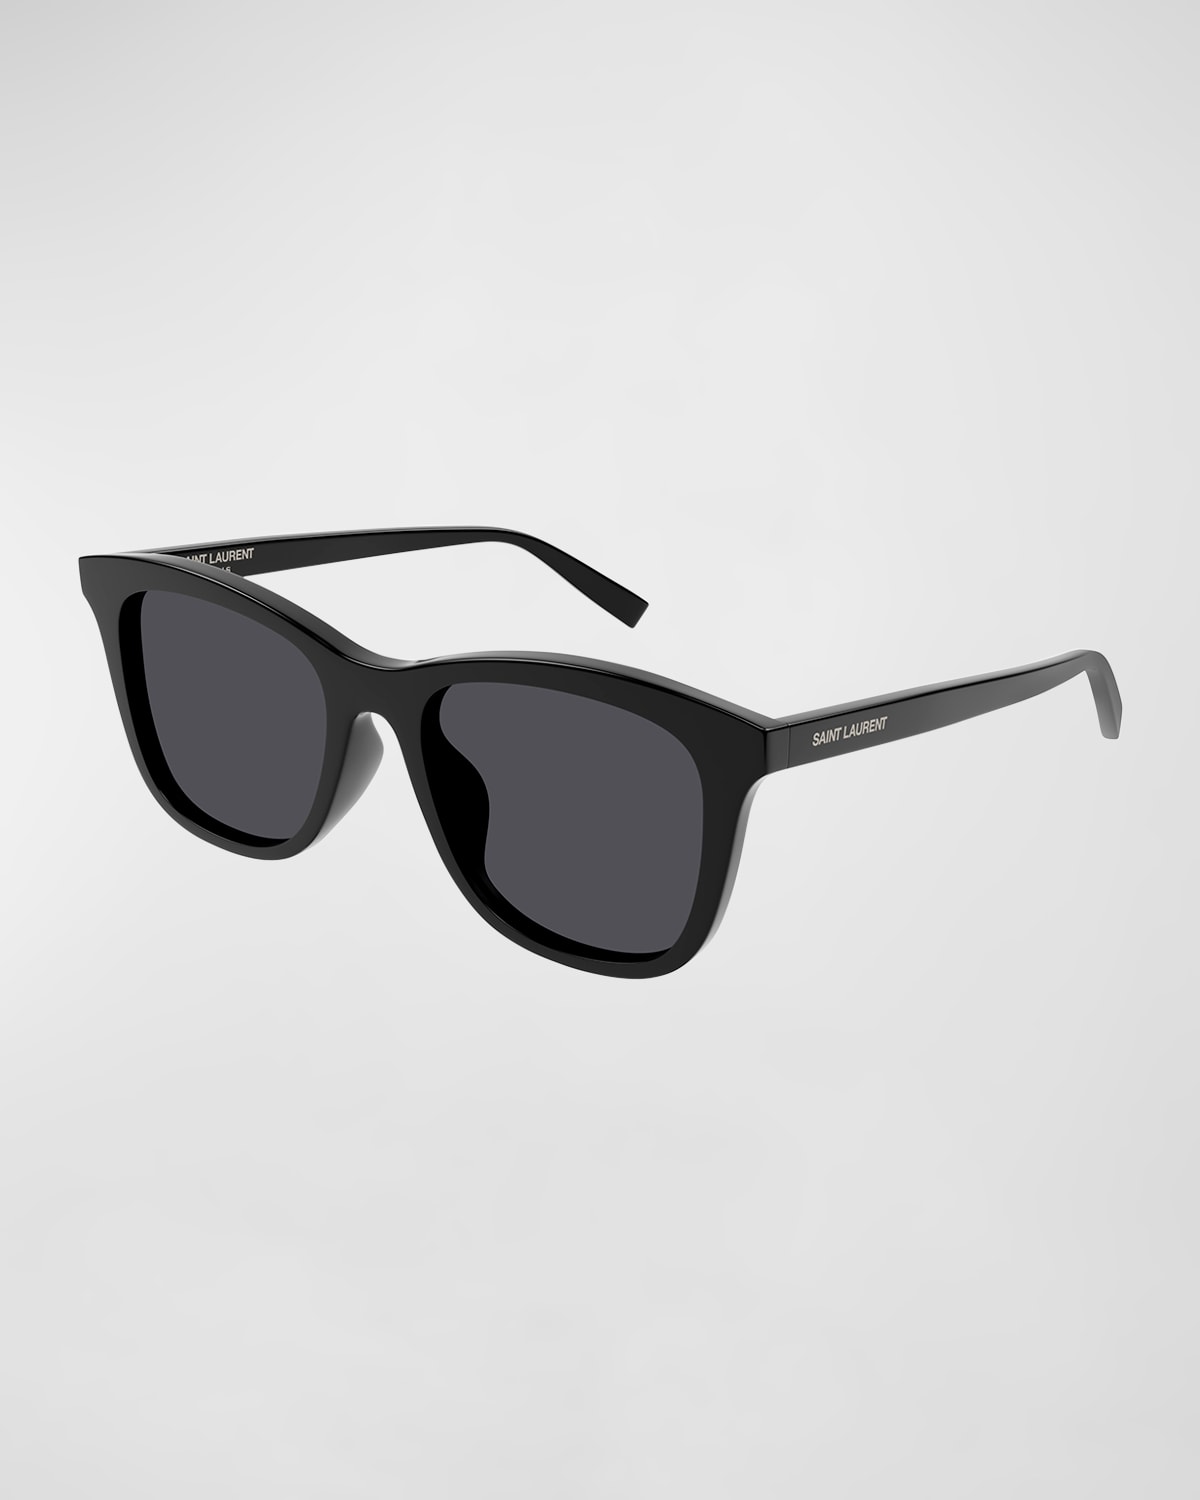  laureles/Square Snakeskin Pattern Rectangle Sunglasses